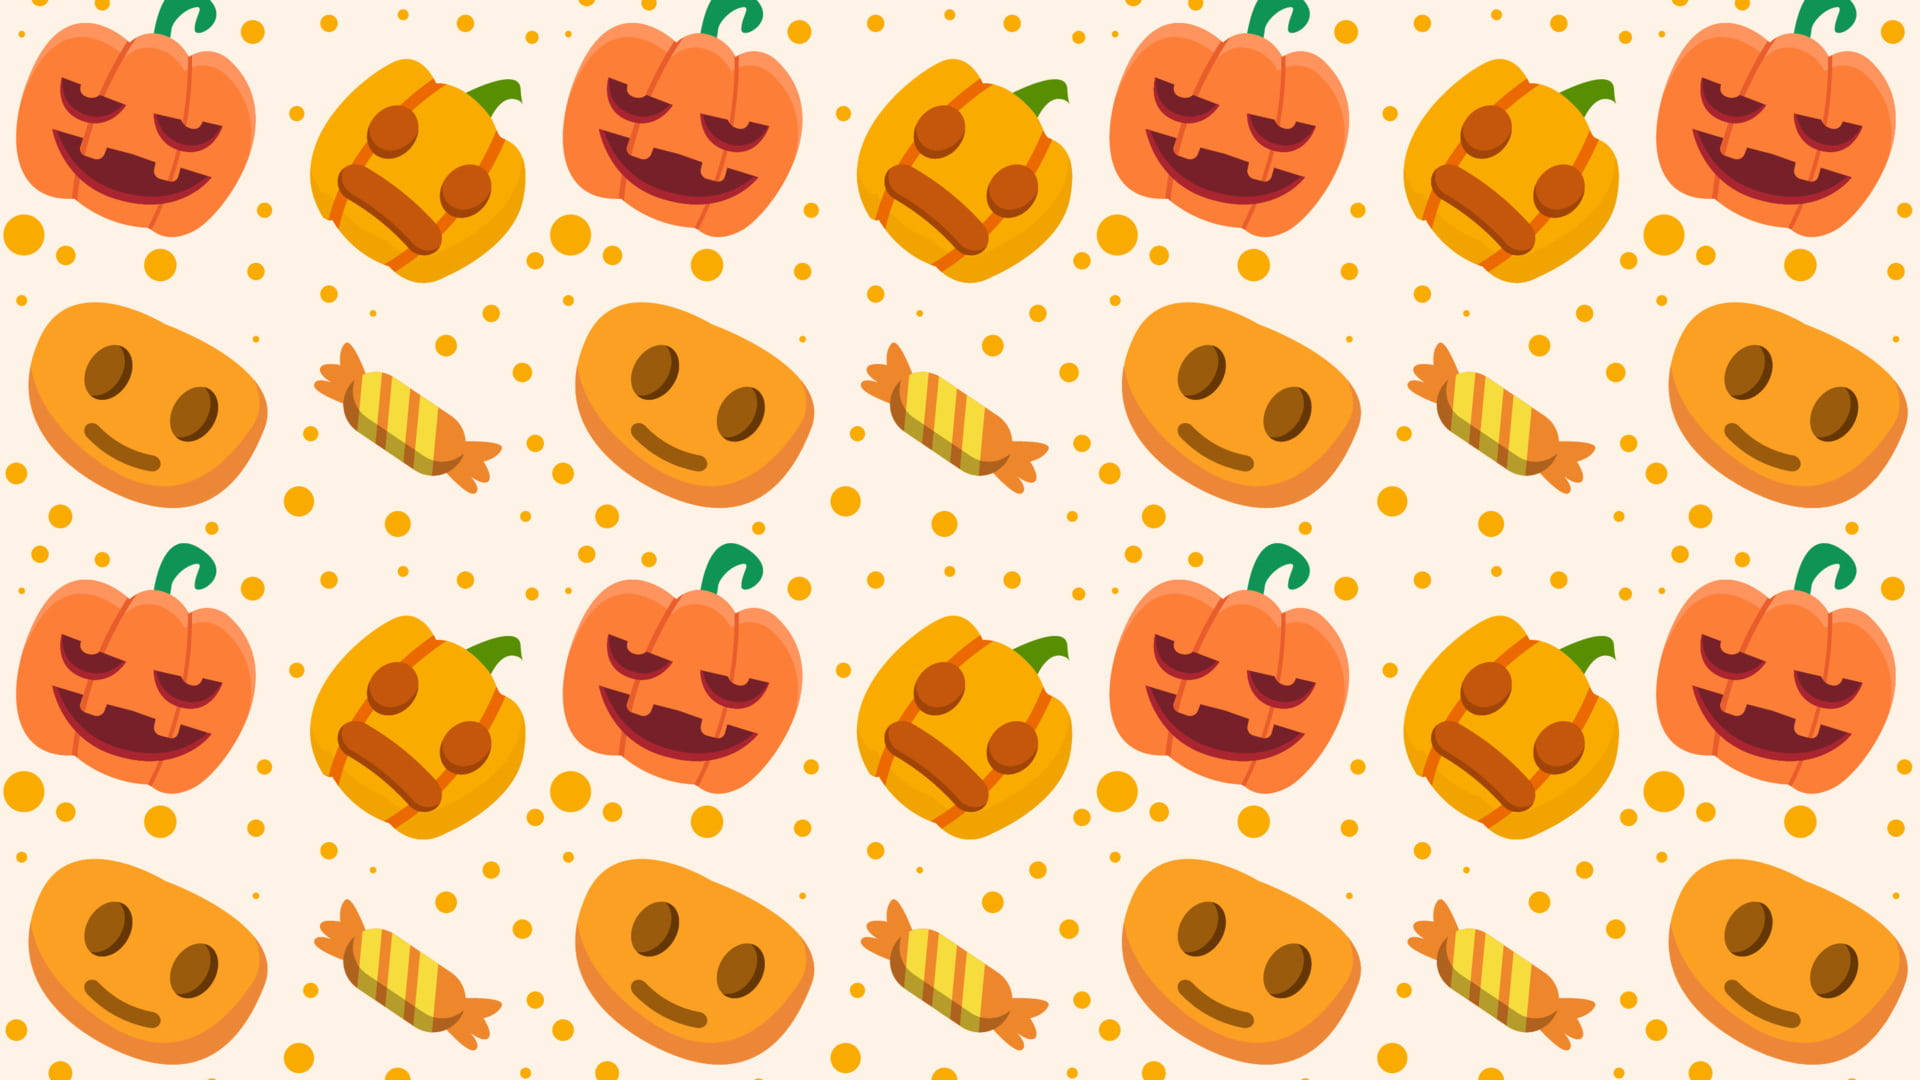 Happy Halloween  Greeting  Desktop Wallpaper by ryushurei on DeviantArt